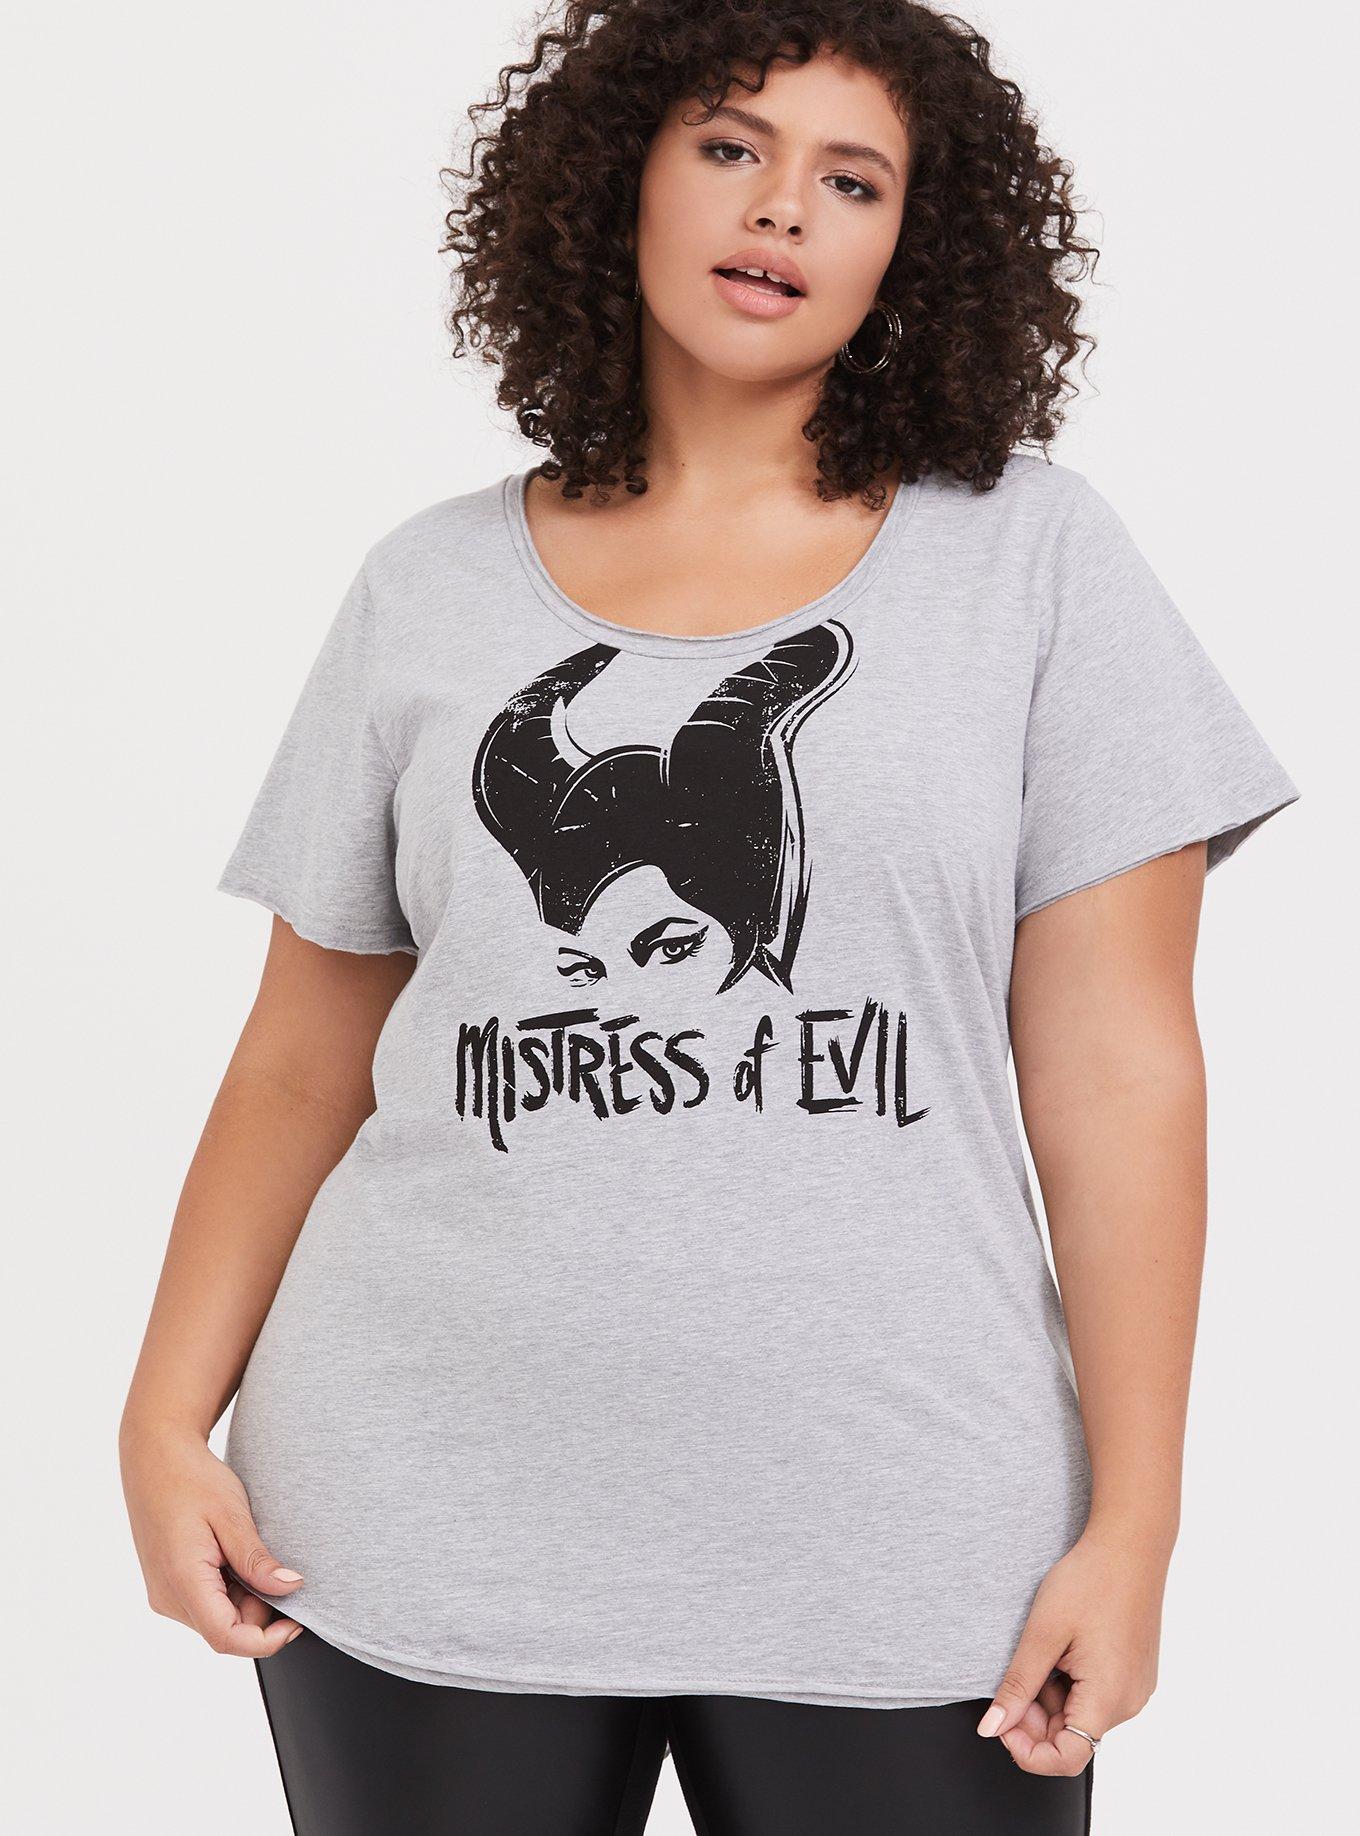 Plus Size - Her Universe Disney Maleficent 2 Mistress of Evil Grey ...